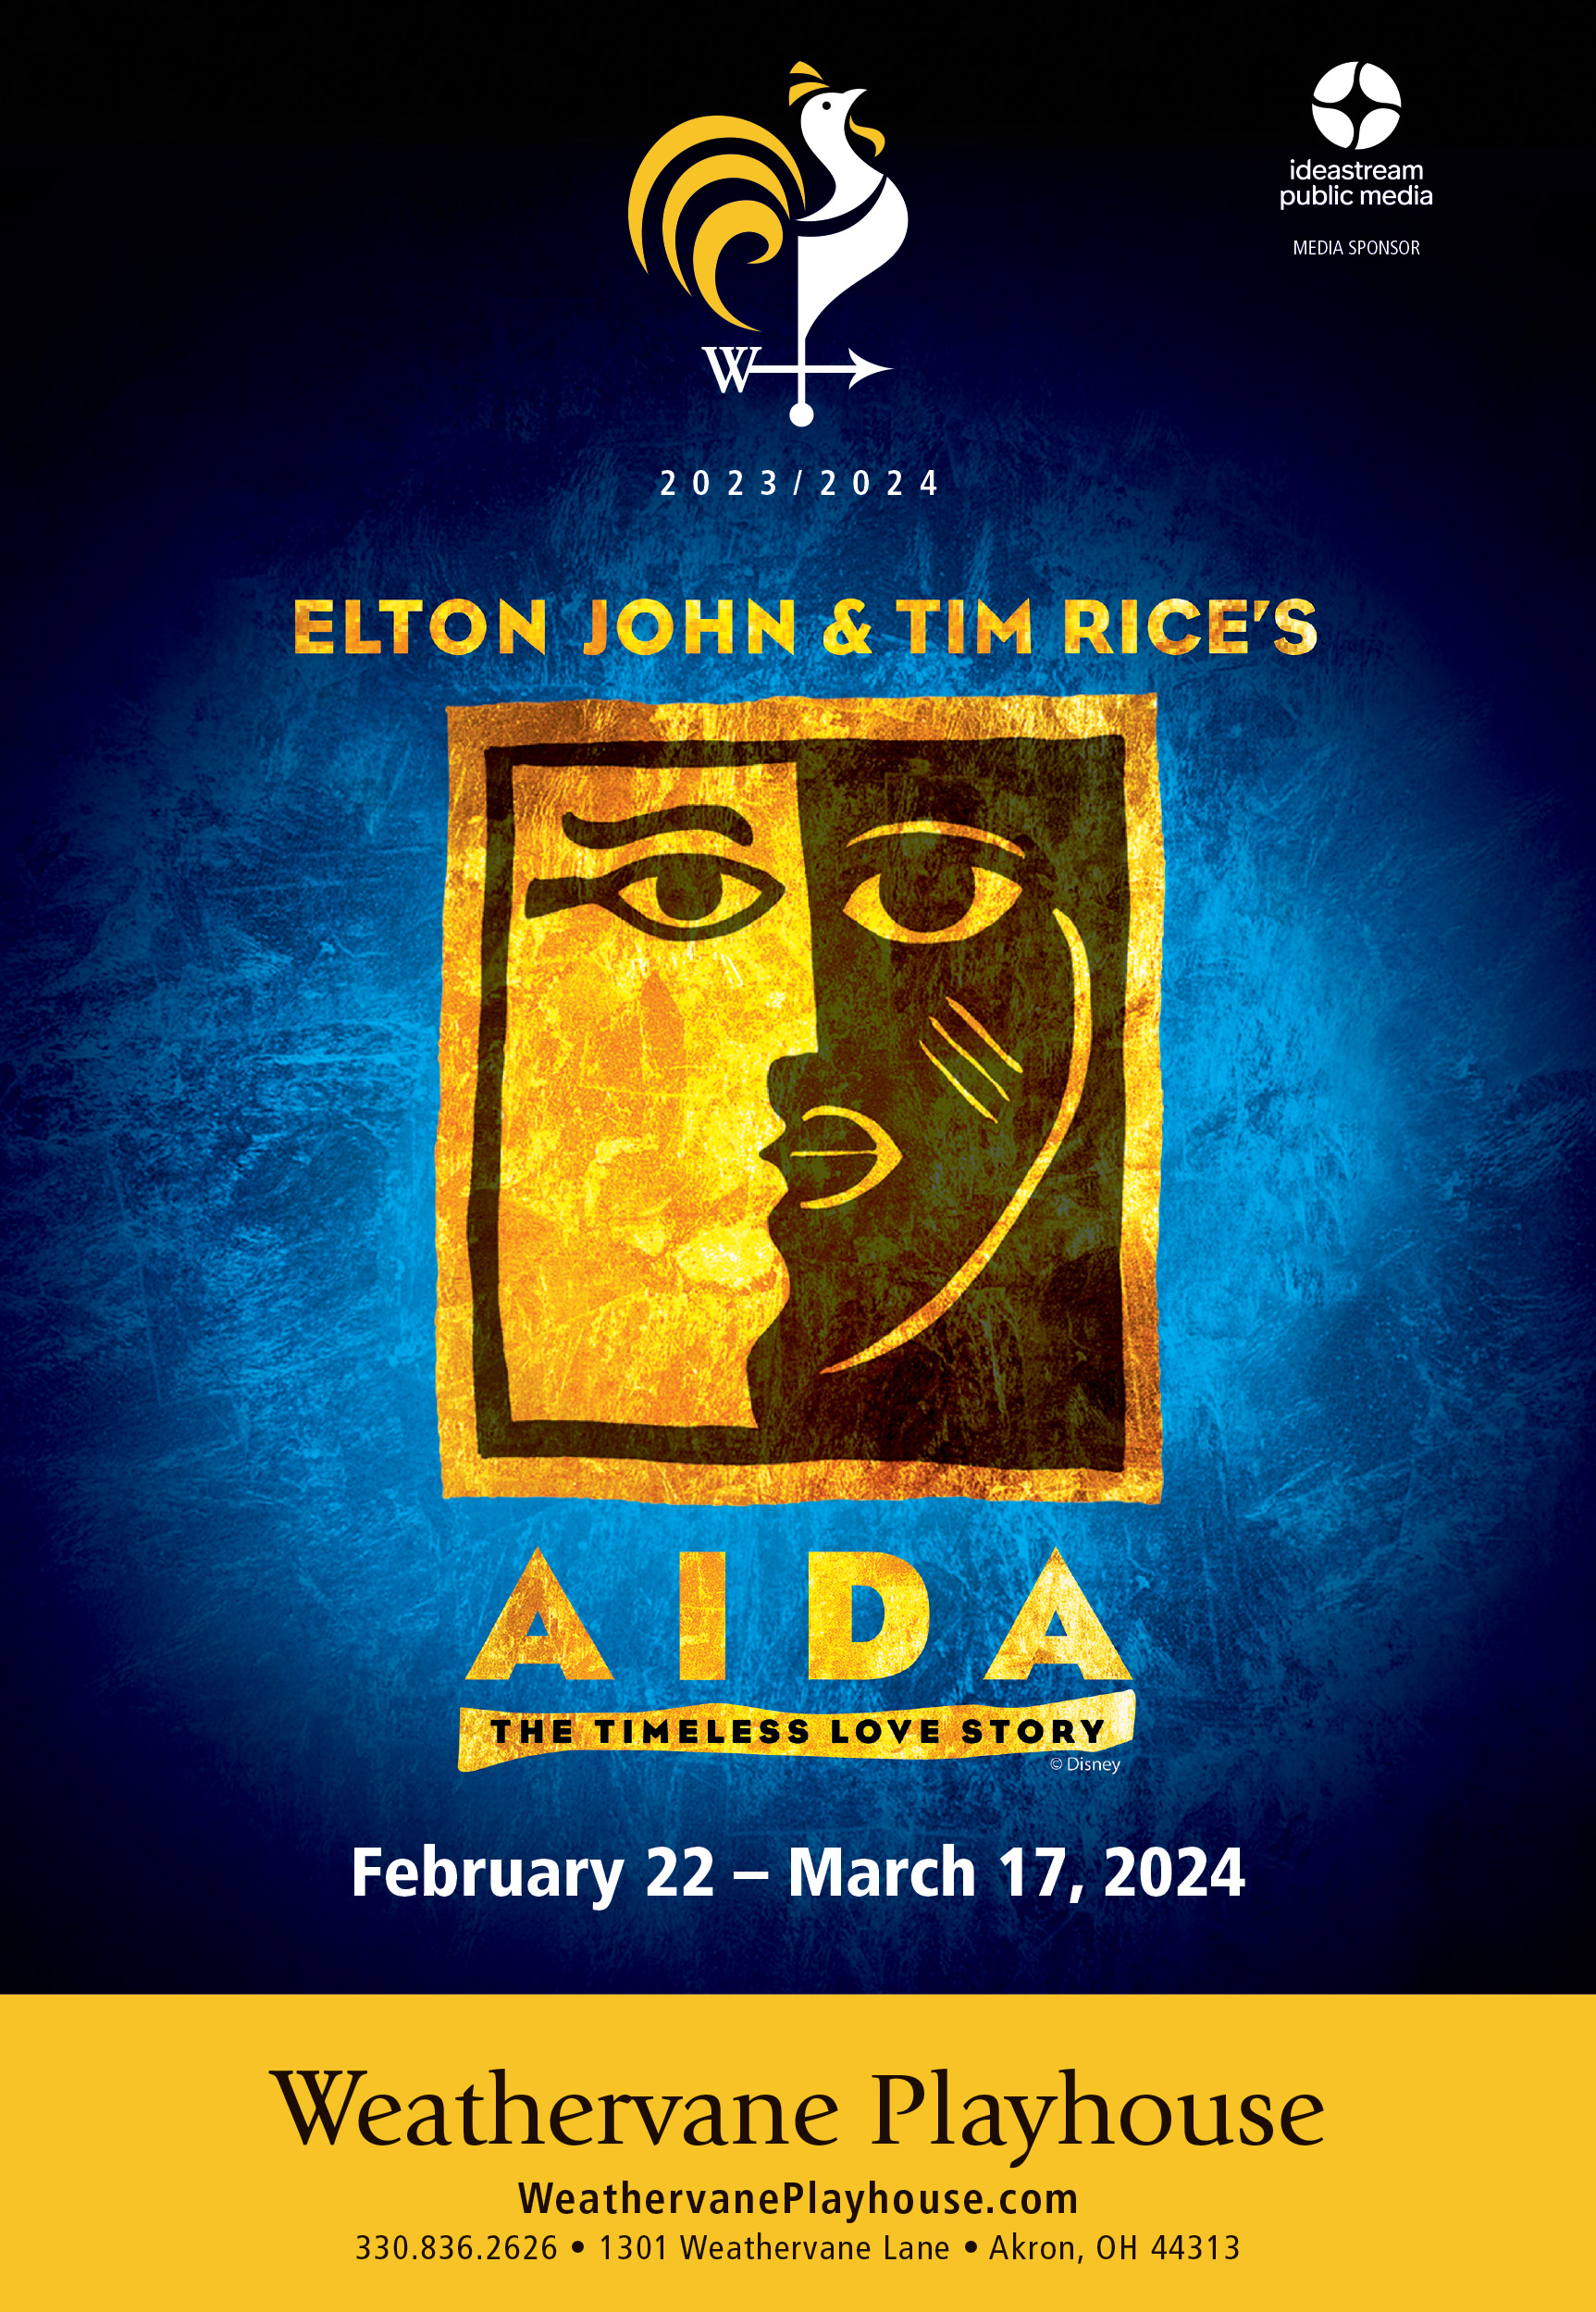 Image for Elton John and Tim Rice's Aida